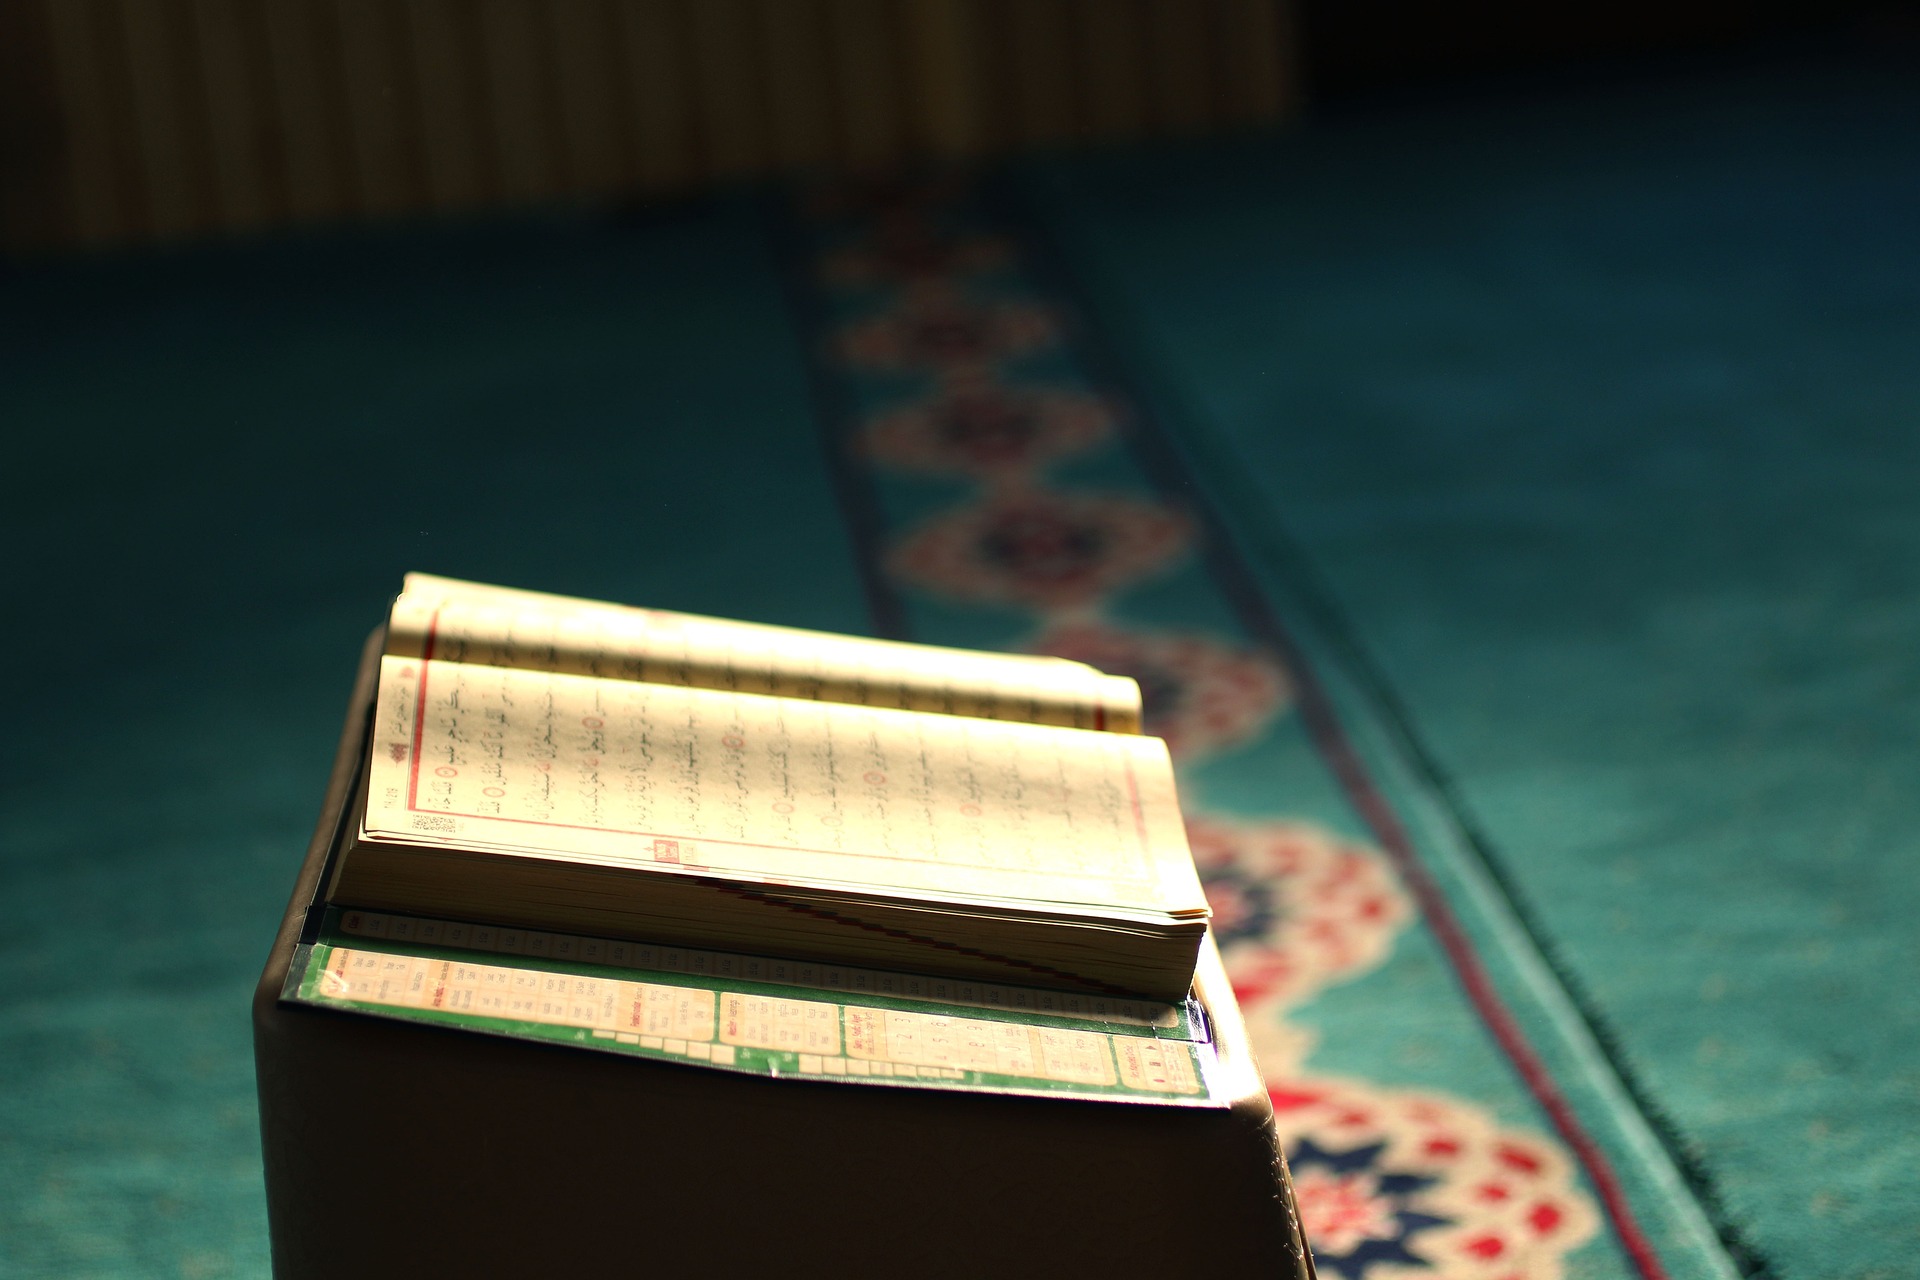 Quran recitation open in the mosque